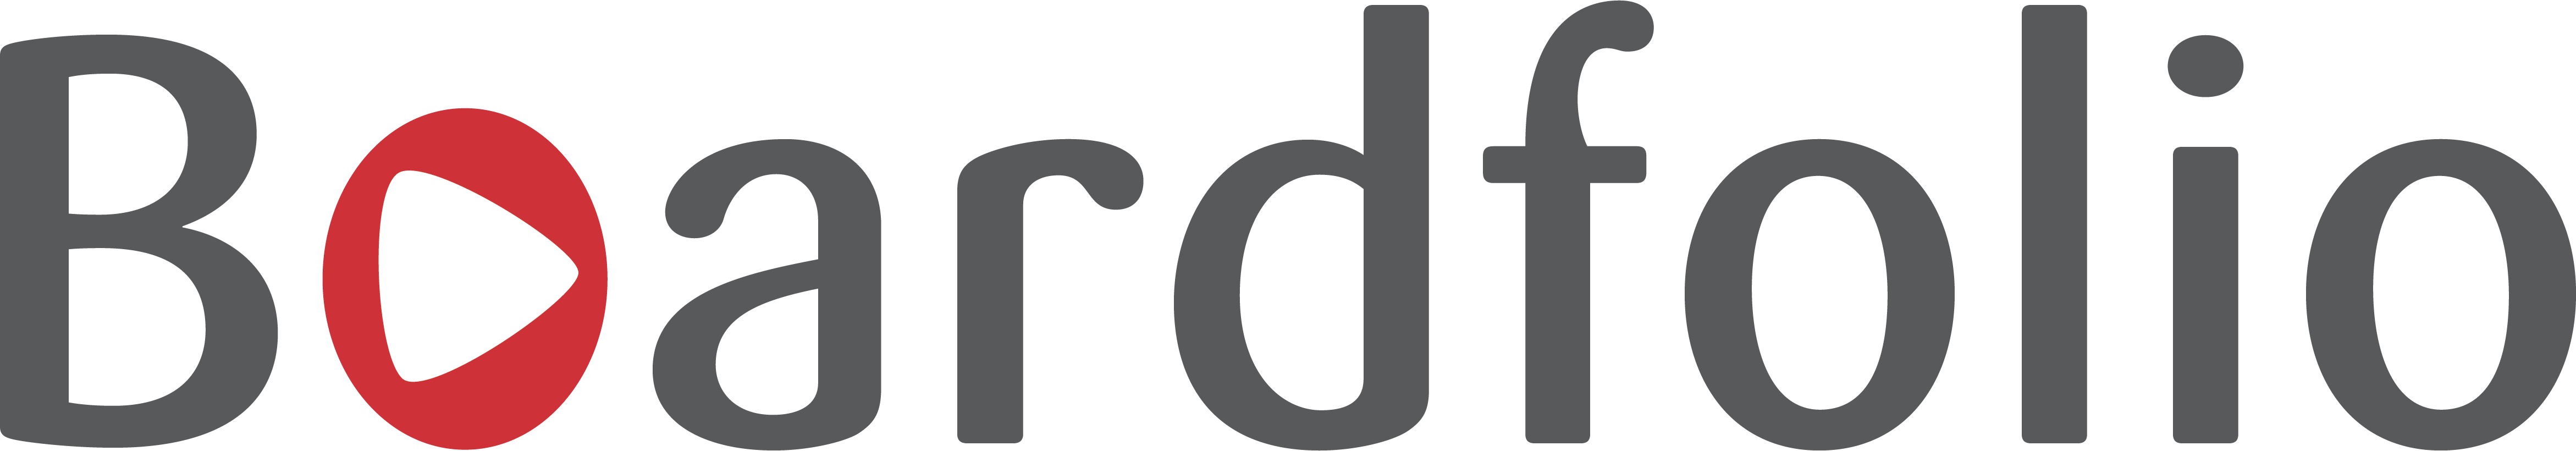 Boardfolio logo